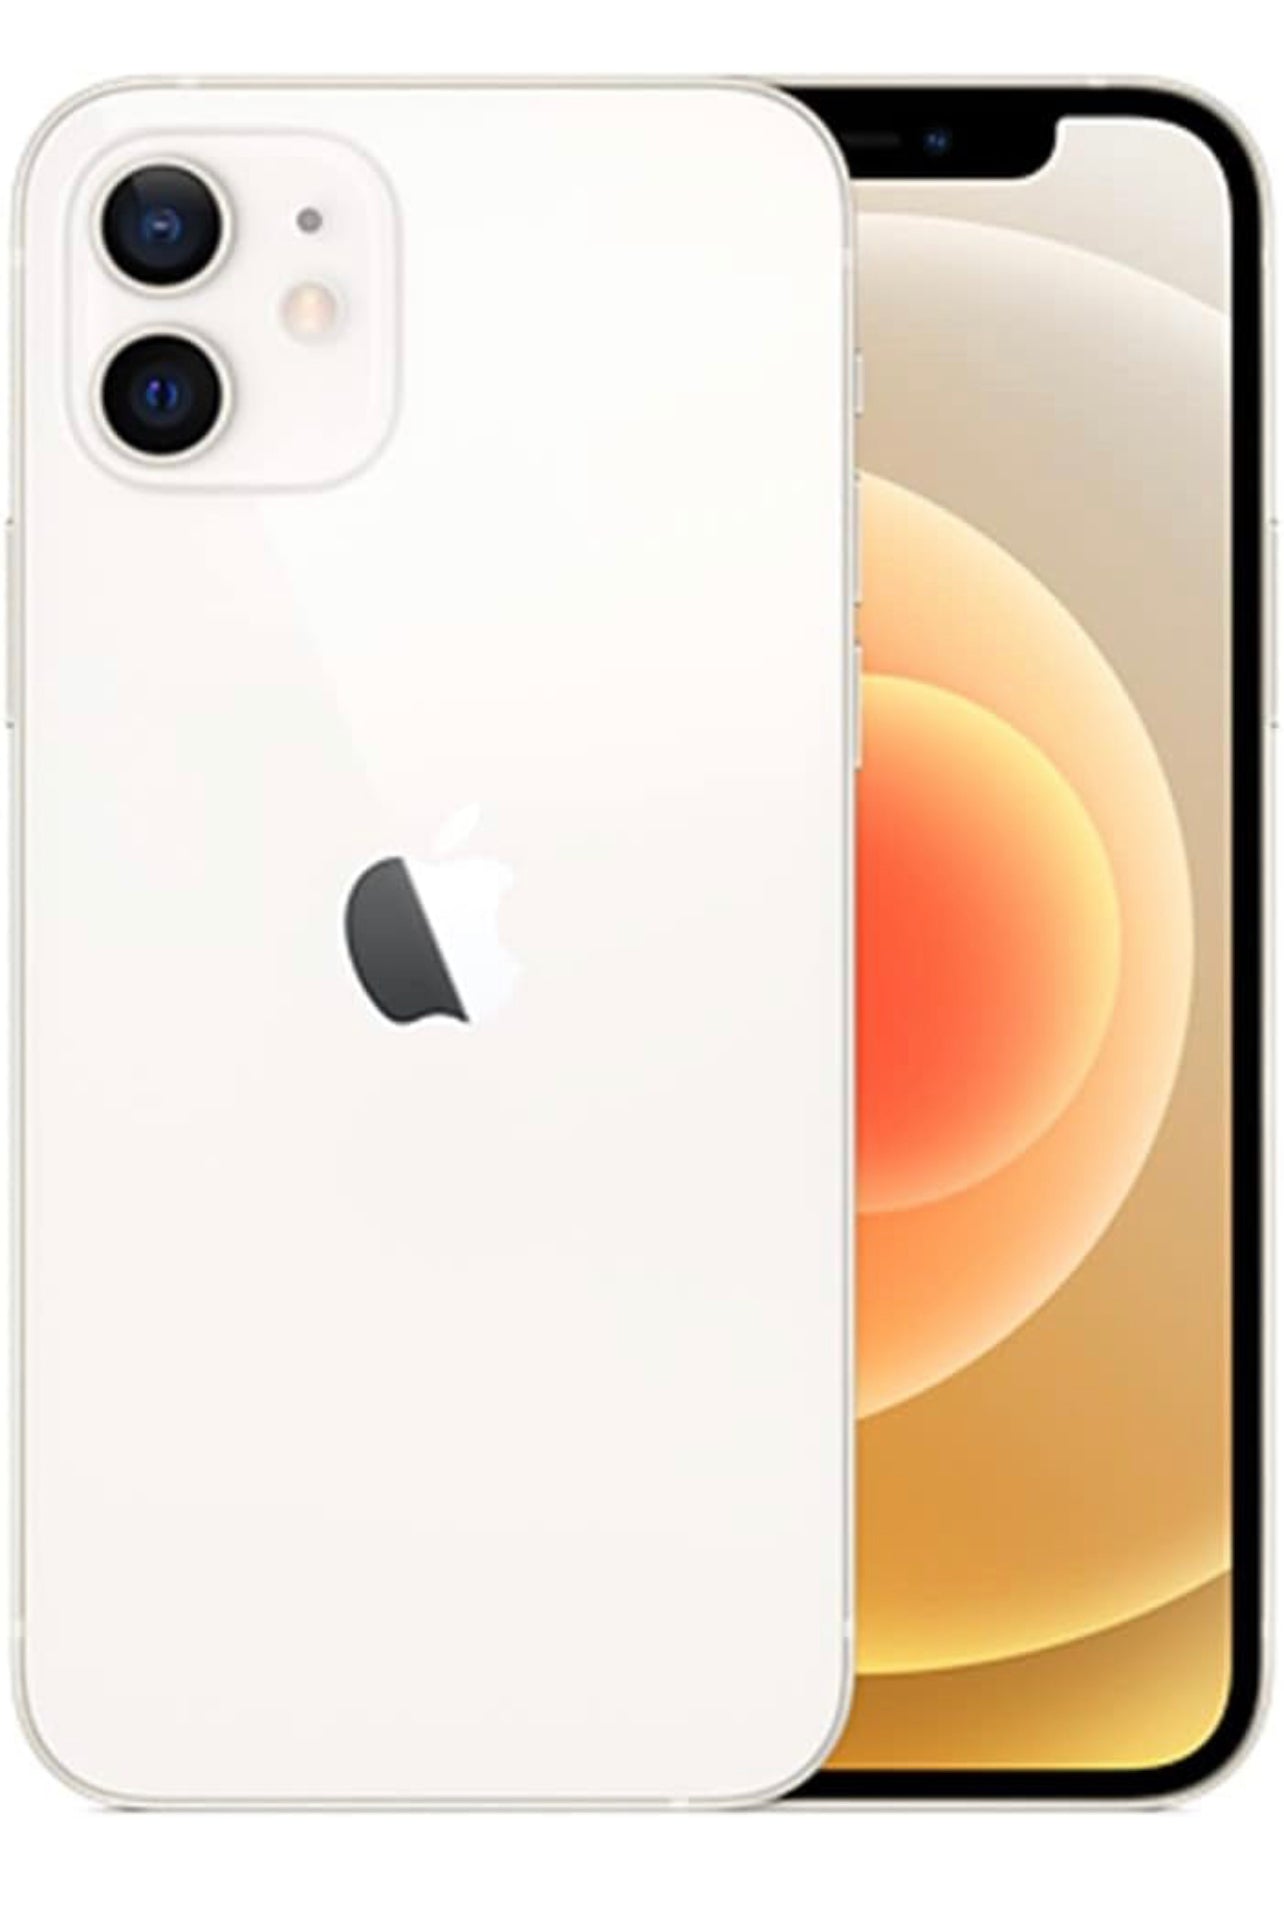 Apple iPhone 11, US Version, 256GB, White - Unlocked (Renovado)